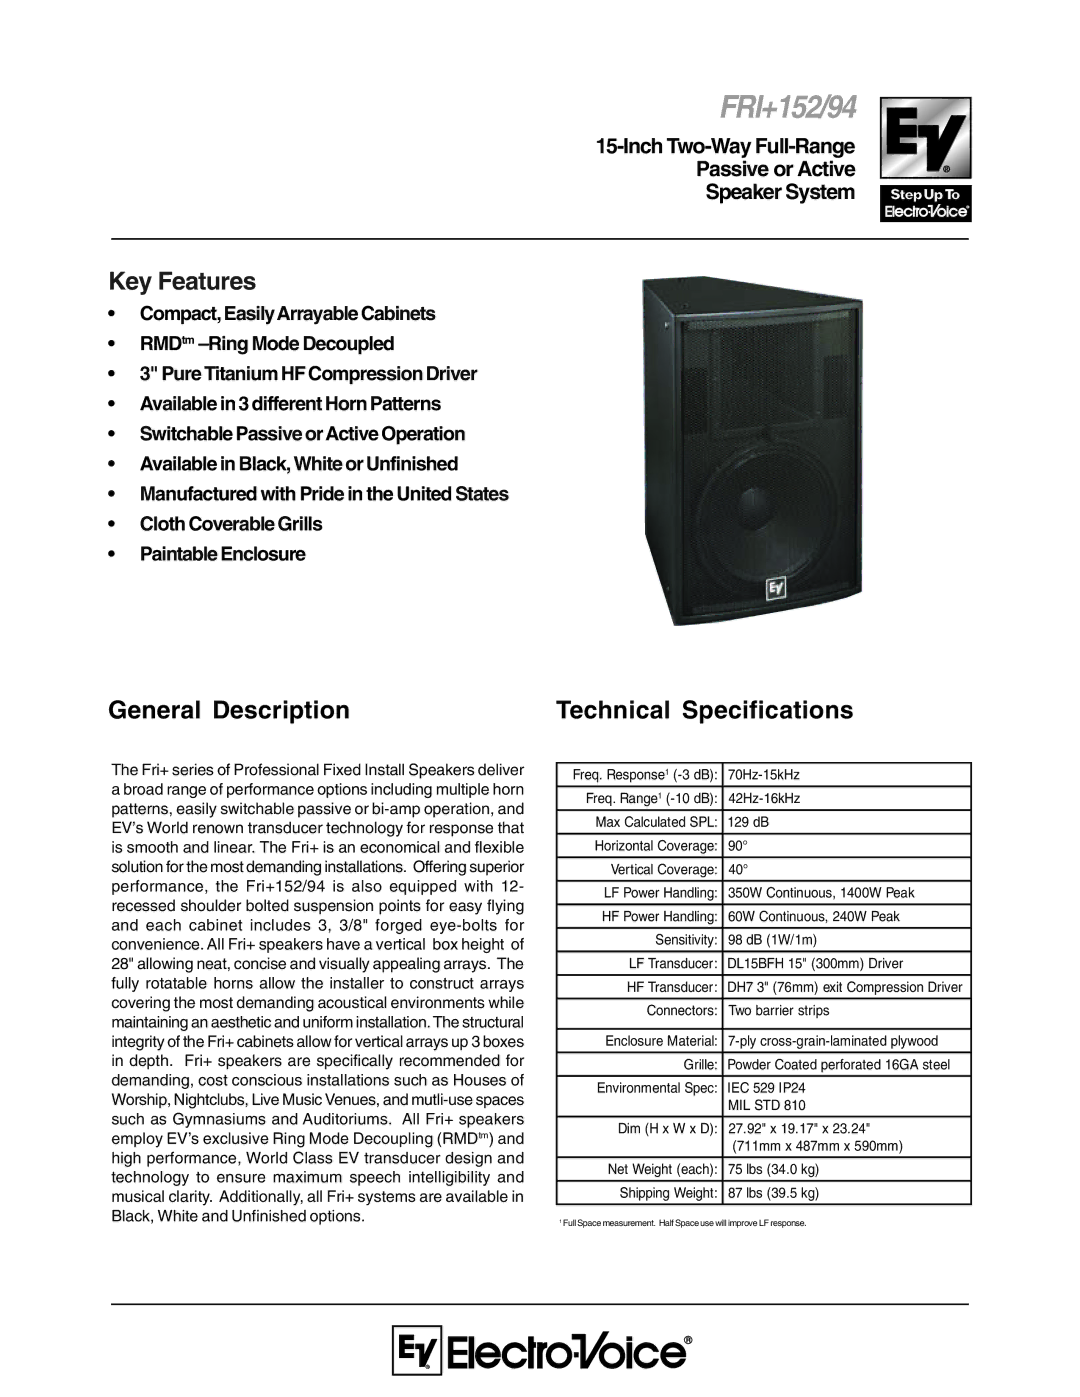 Electro-Voice FRI+152/94 technical specifications General Description 